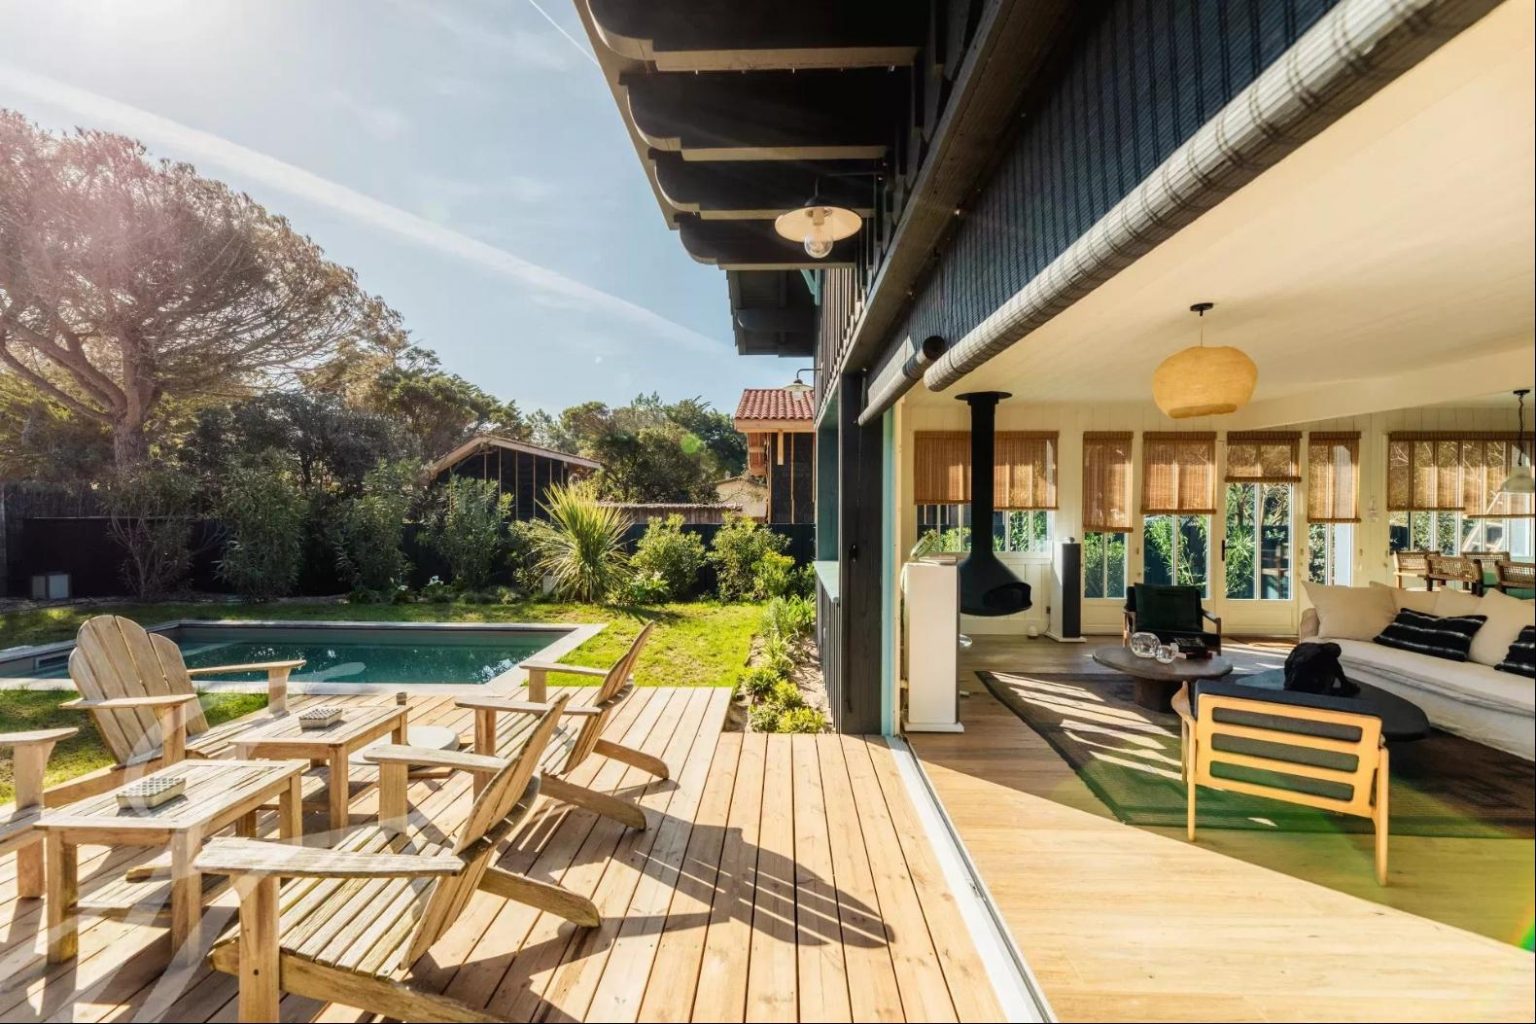 terrasse avec piscine maison en bois style Cap Ferret